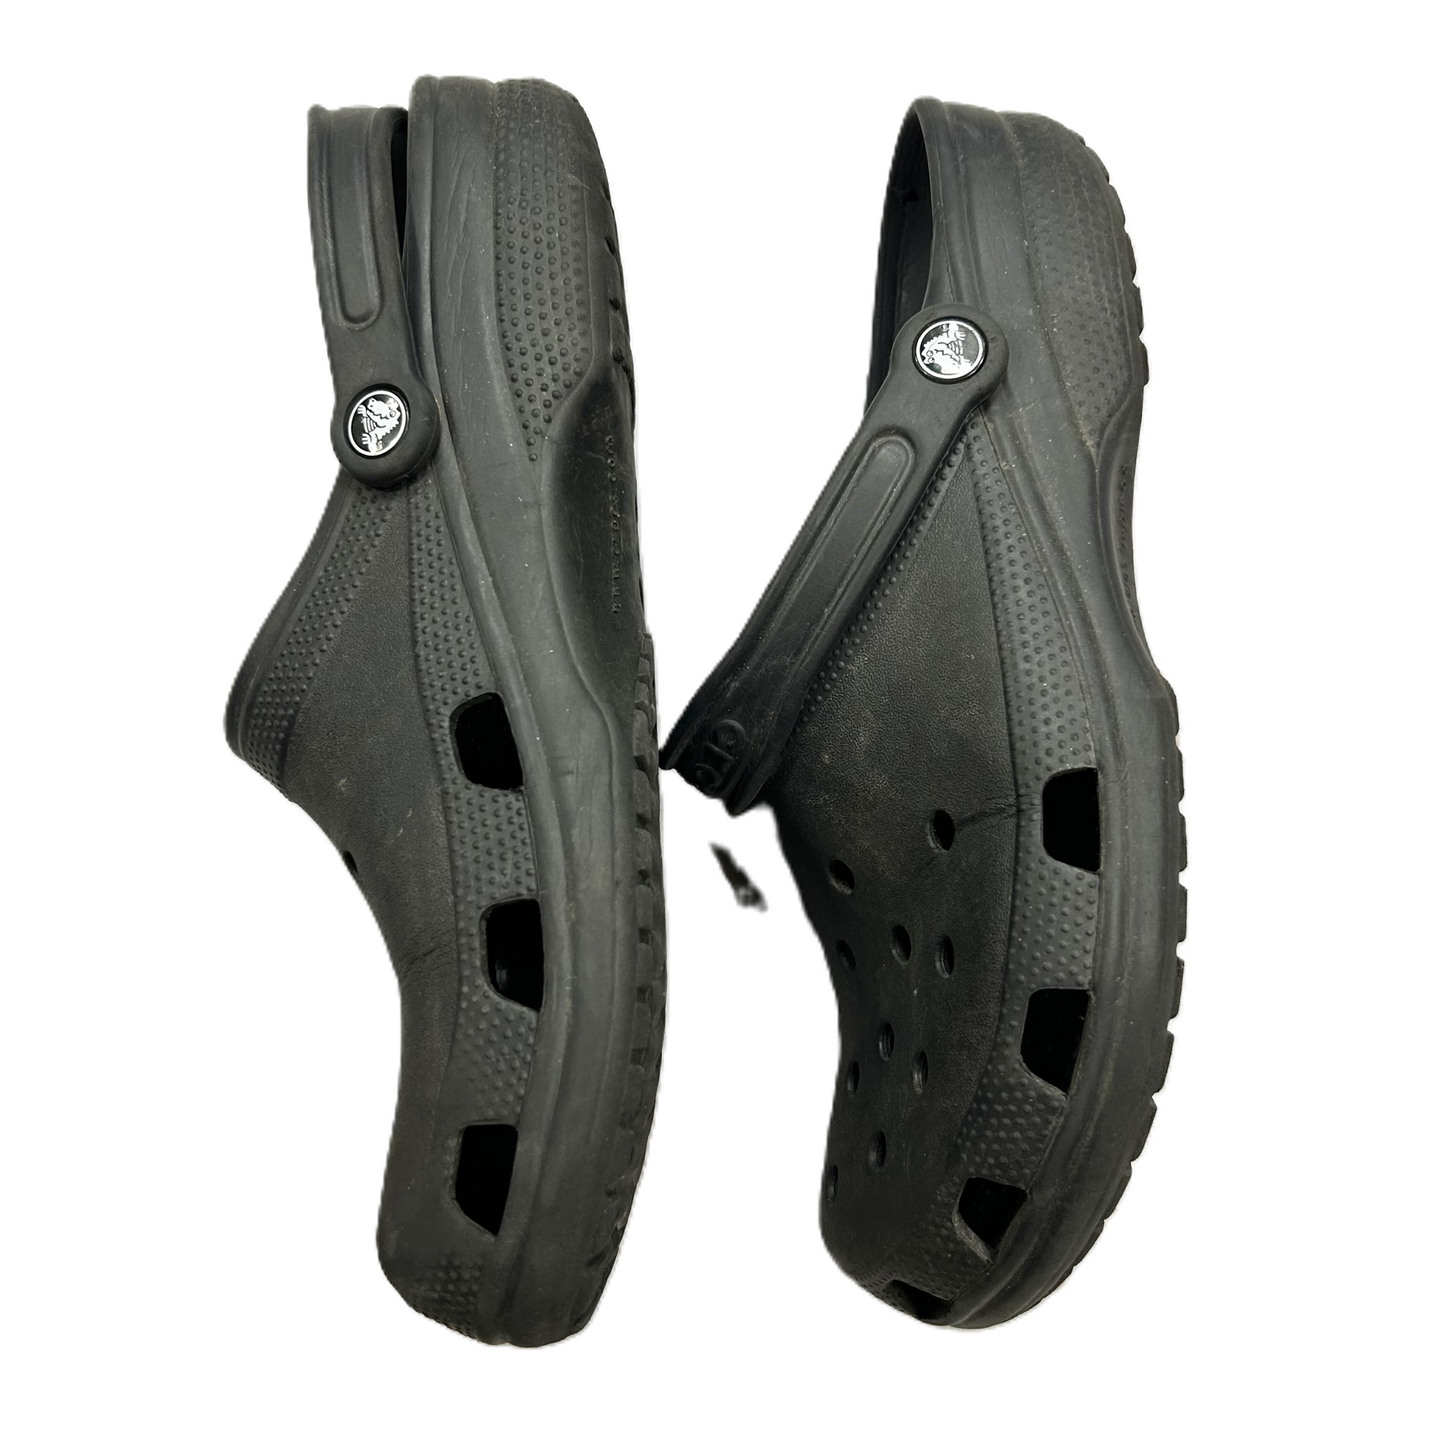 Shoes Flats By Crocs  Size: 12